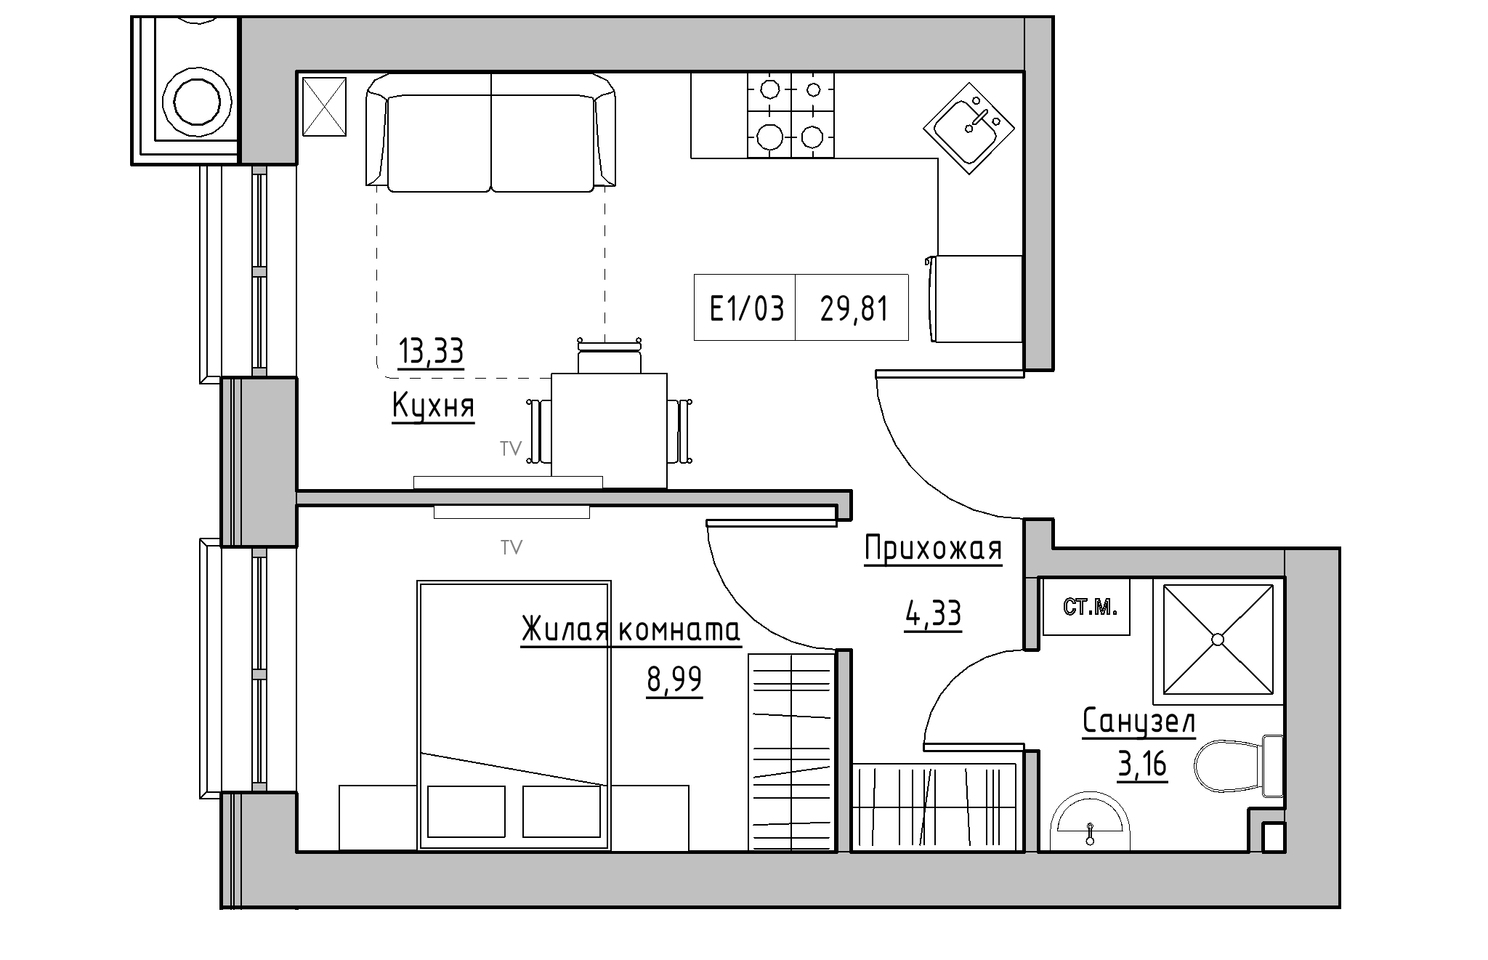 Planning 1-rm flats area 29.81m2, KS-010-01/0012.